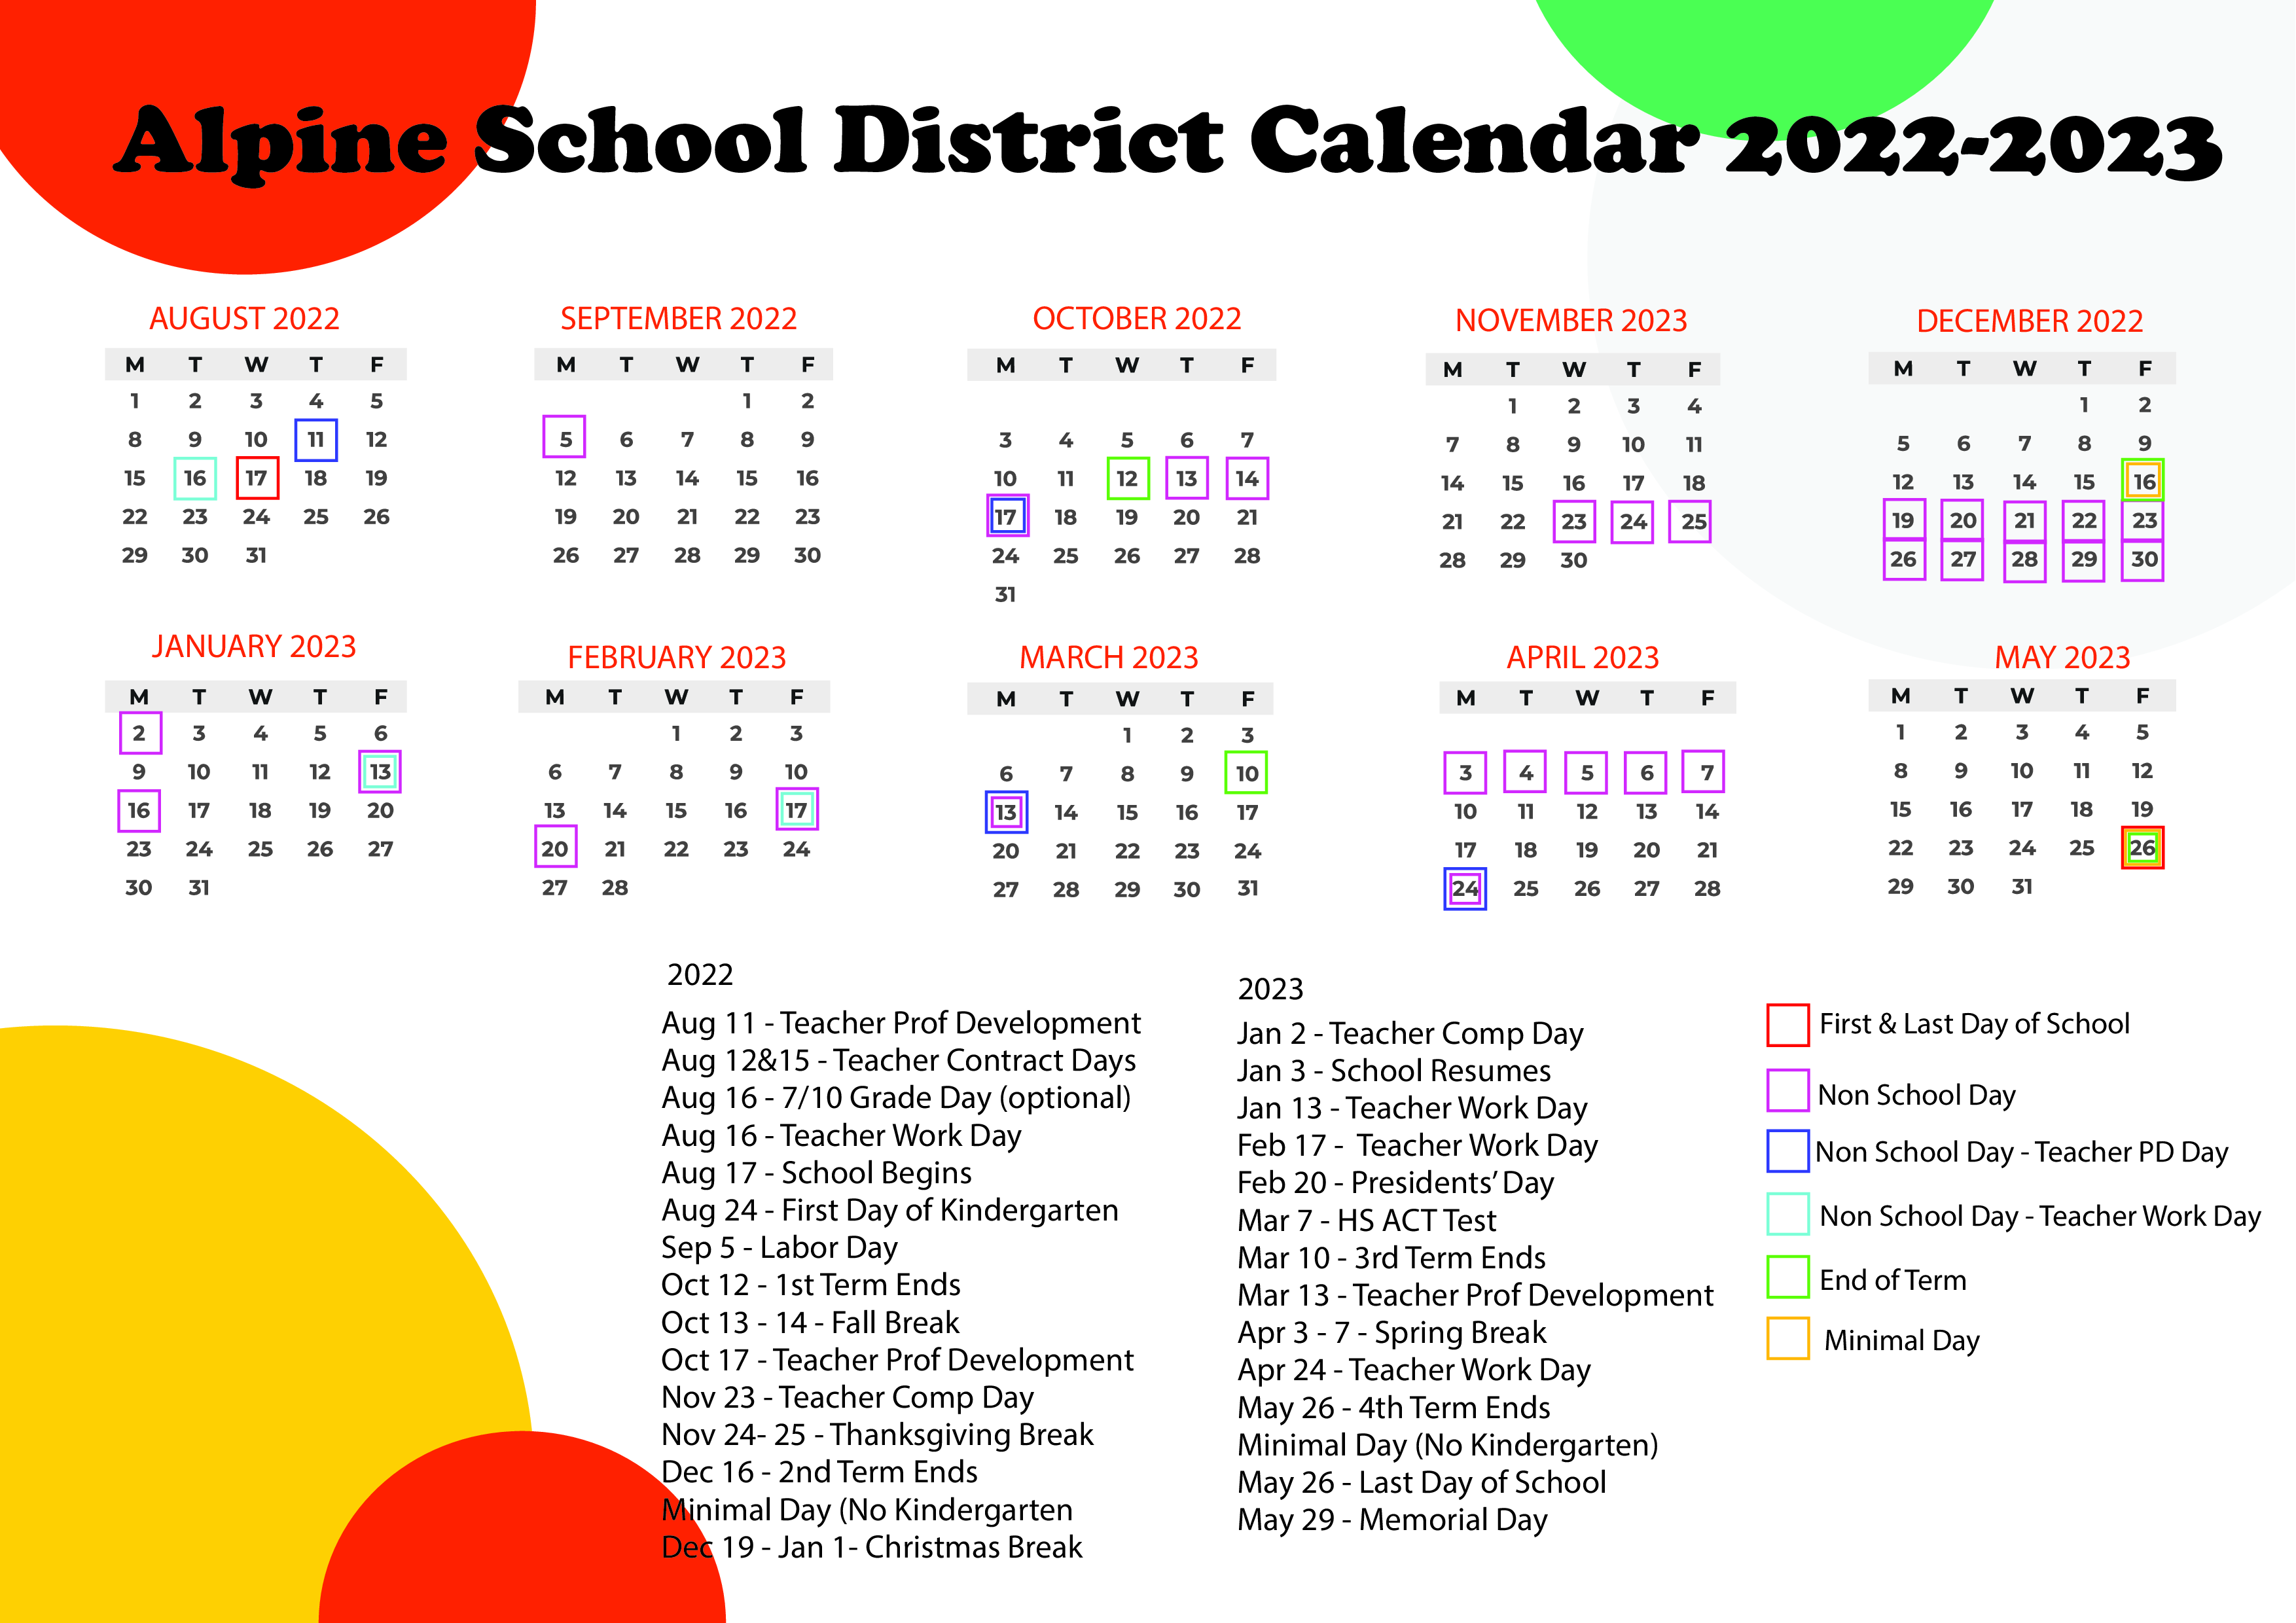 Alpine School District Calendar with Holidays 20222023